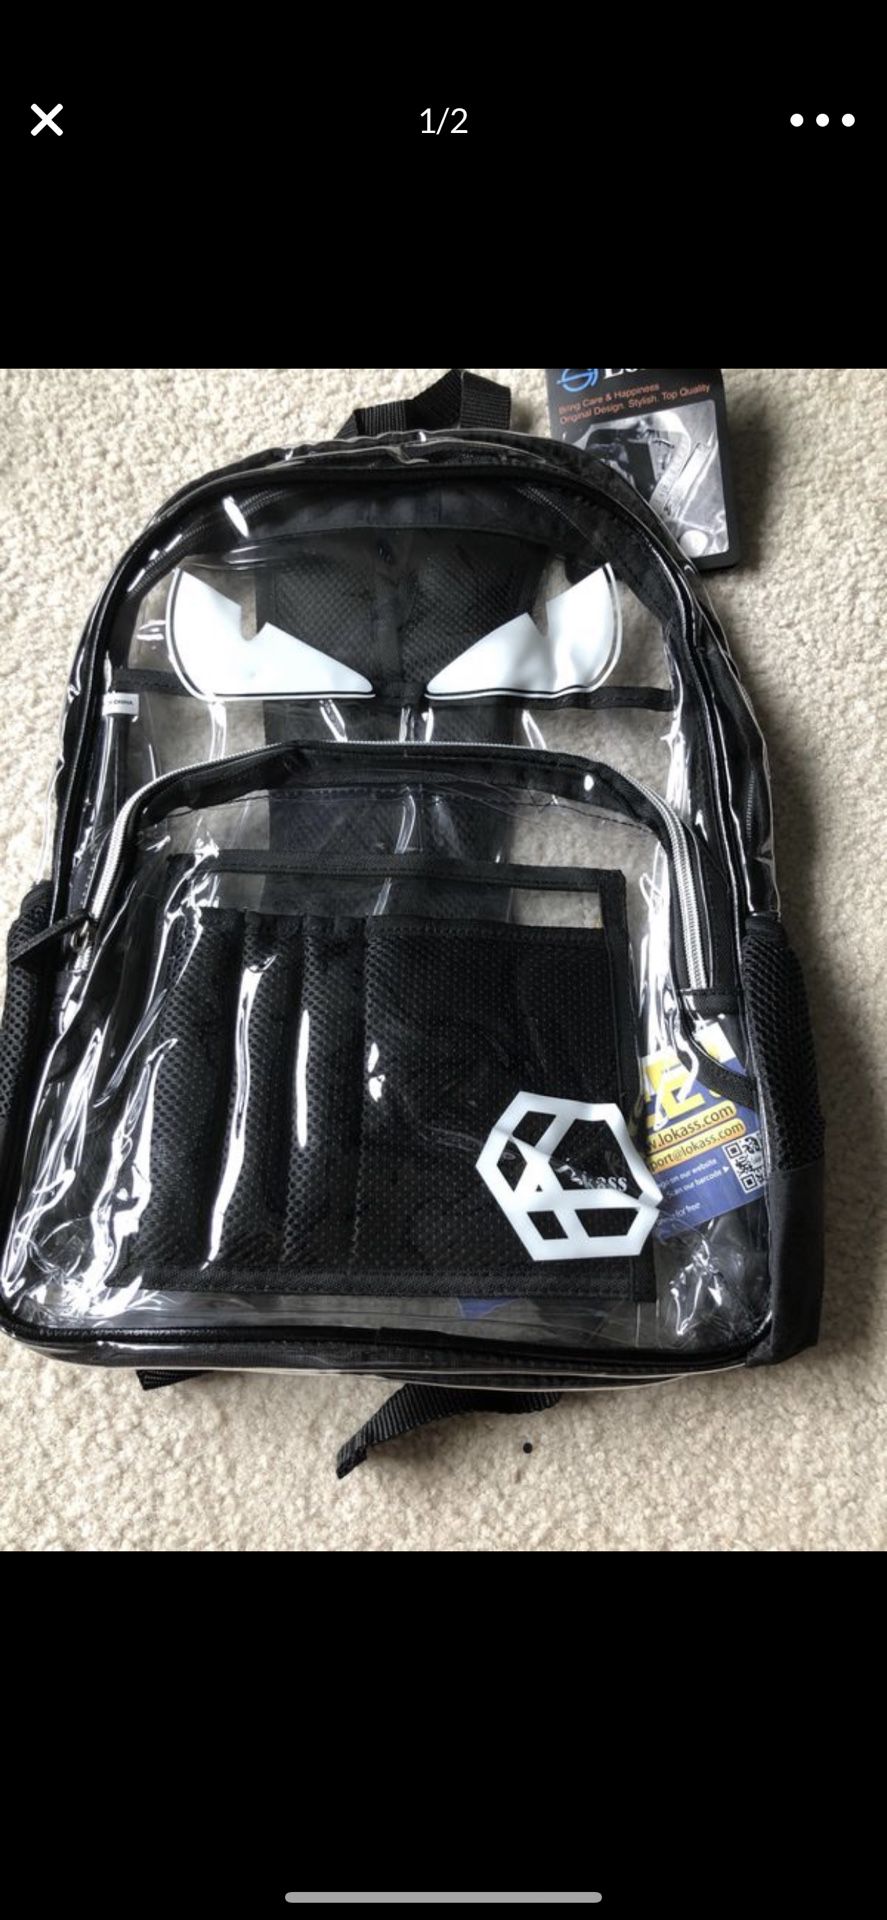 LOKASS Large Clear Backpack Transparent Multi-Pockets Backpacks/Outdoor Backpack Fit 15.6 Inch Laptop Safety Travel Rucksack with Black Trim